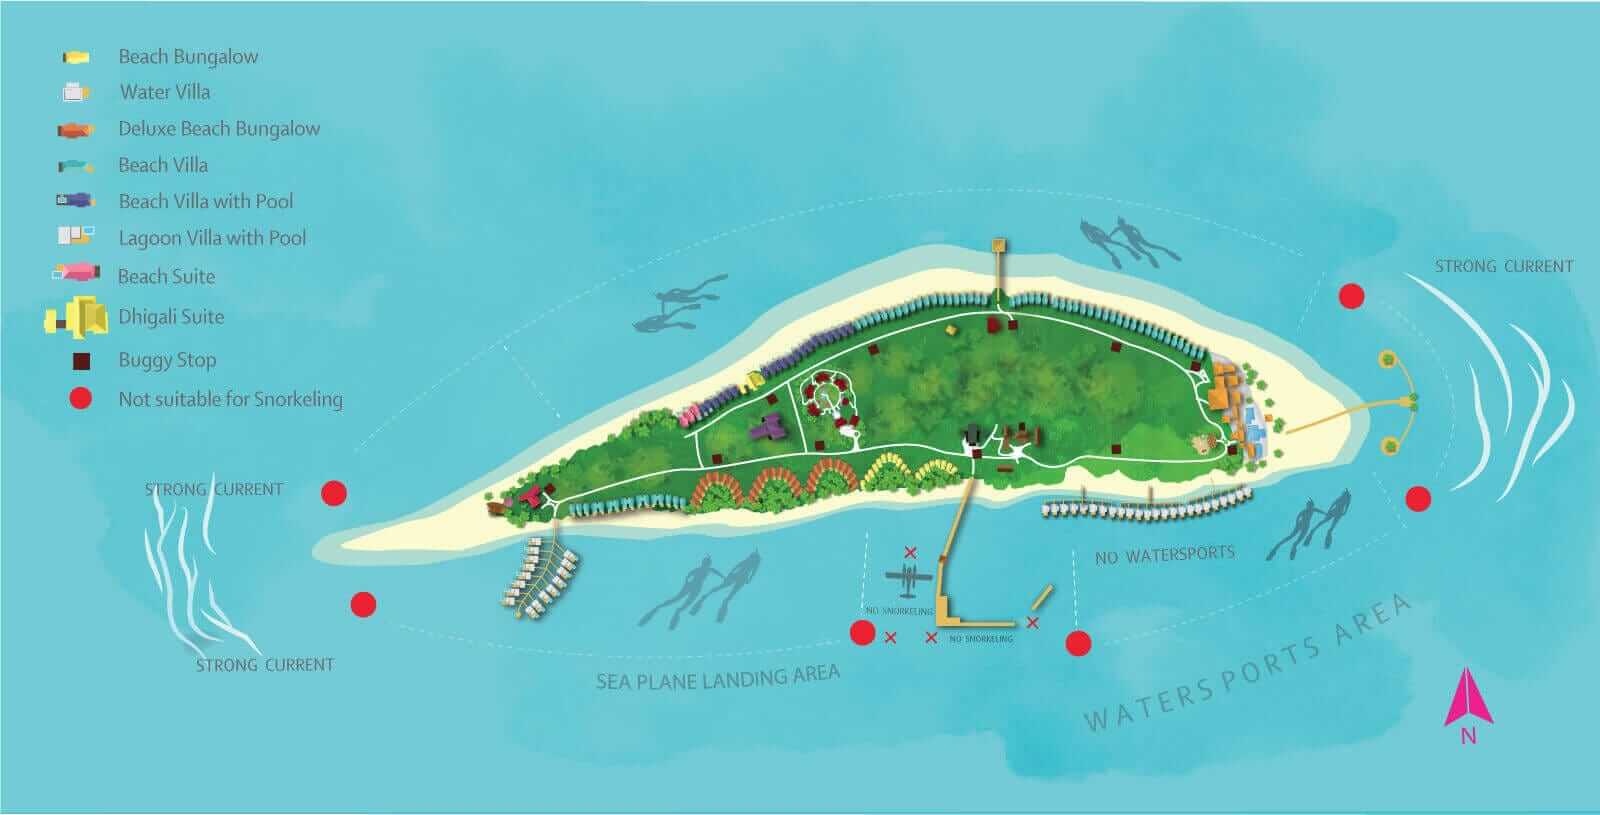 Island Map for Dhigali Maldives